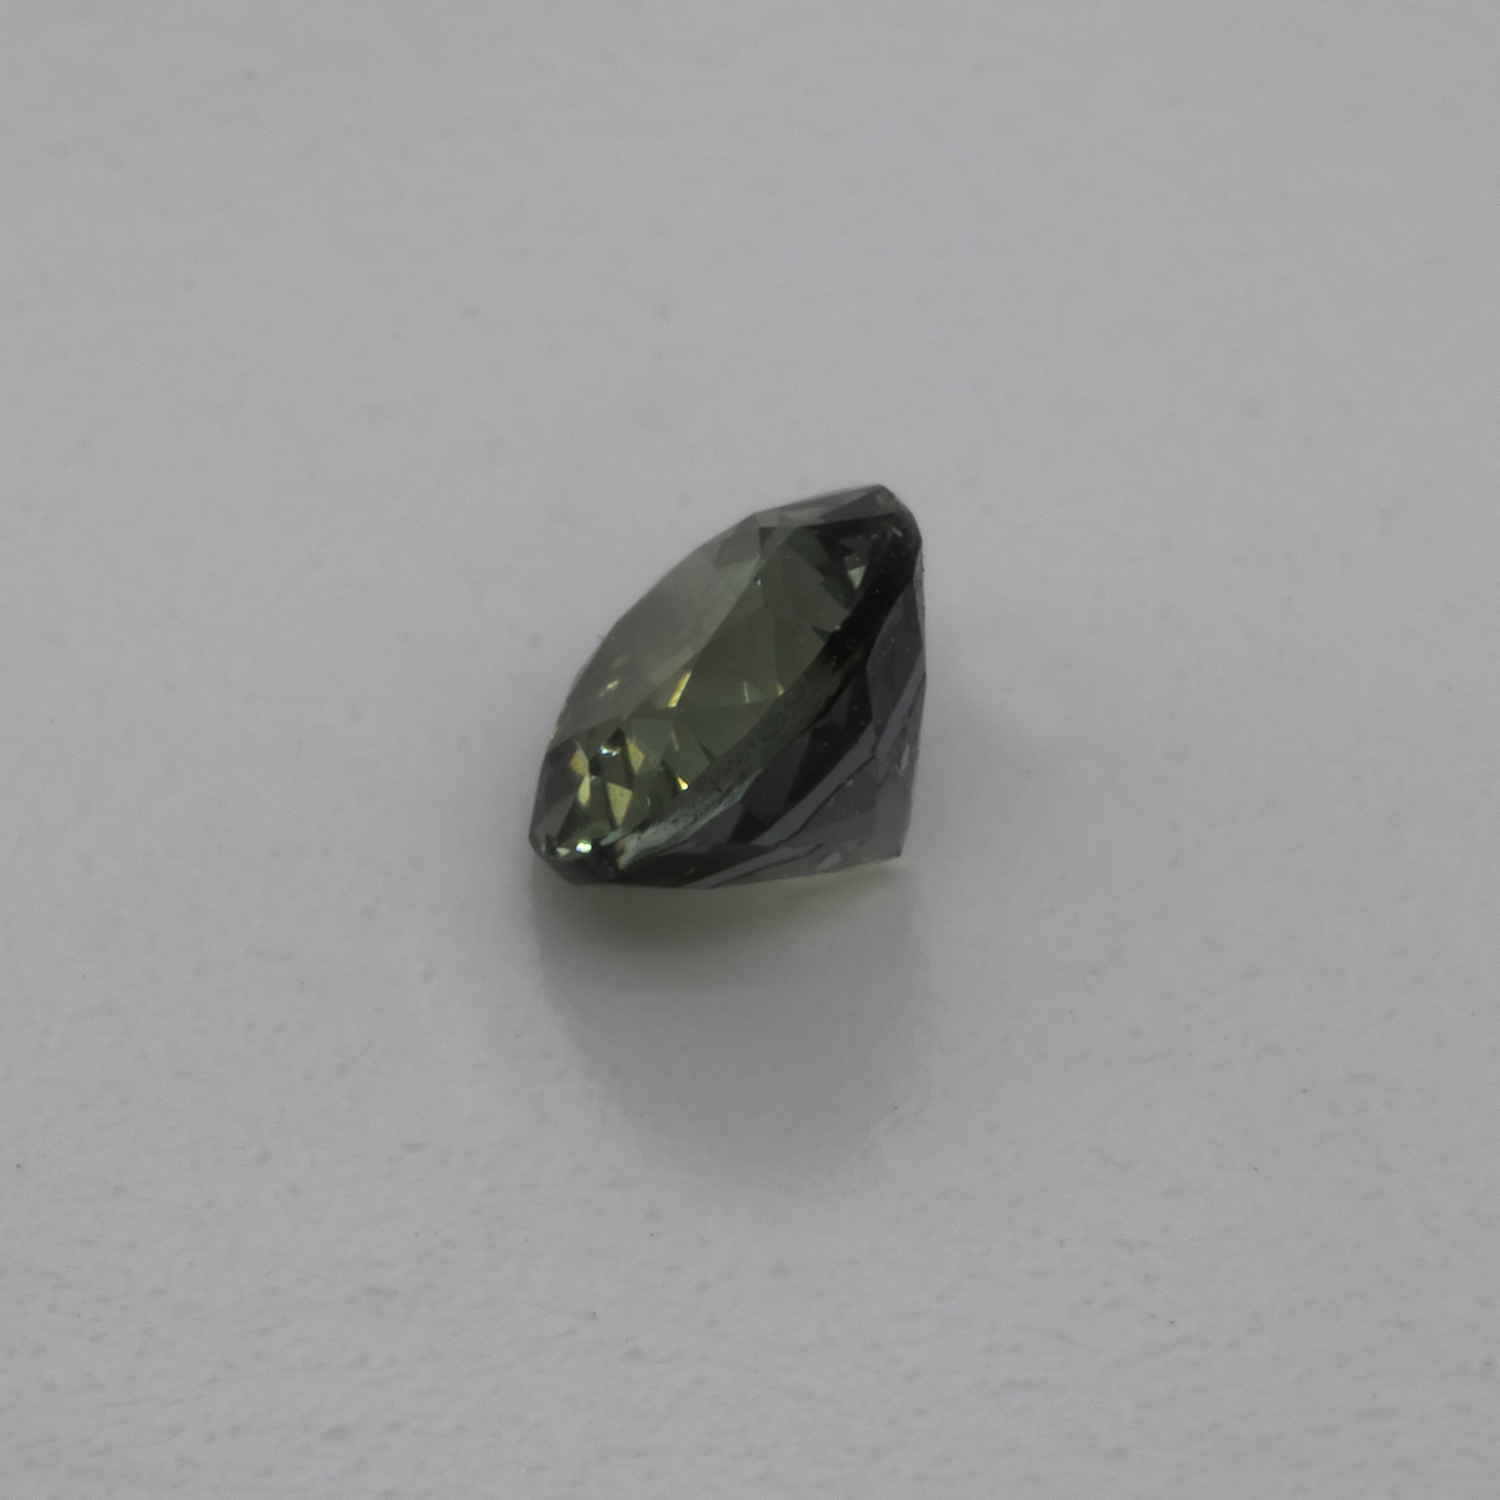 Saphir - grün/blau, rund, 4,1x4,1 mm, 0,35 cts, Nr. XSR11225